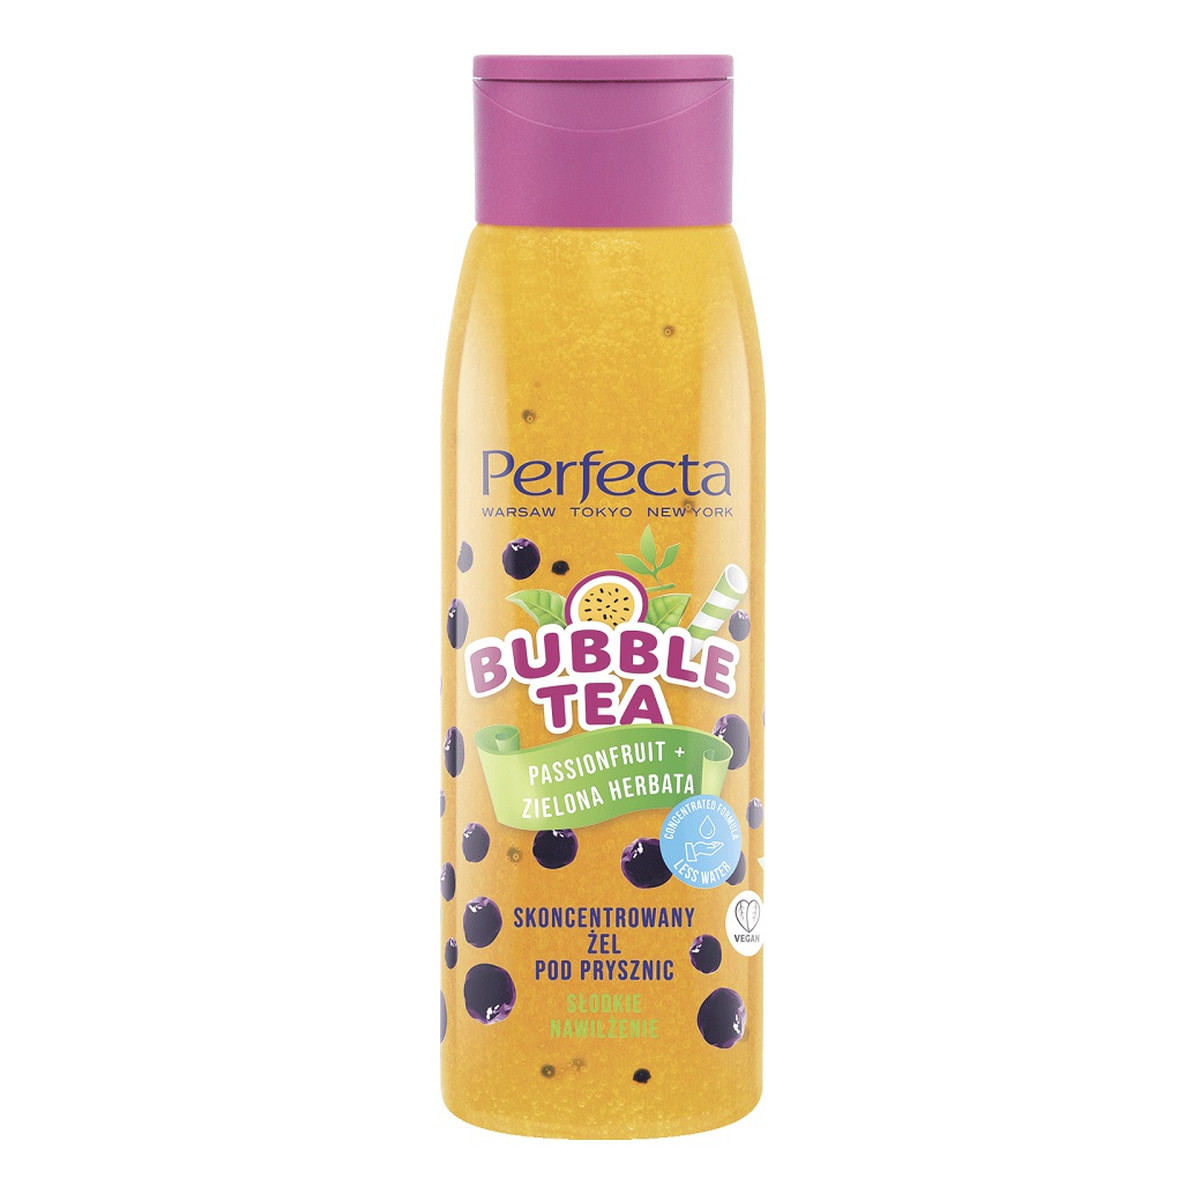 Perfecta Bubble Tea skoncentrowany Żel pod prysznic passionfruit & zielona herbata 400ml